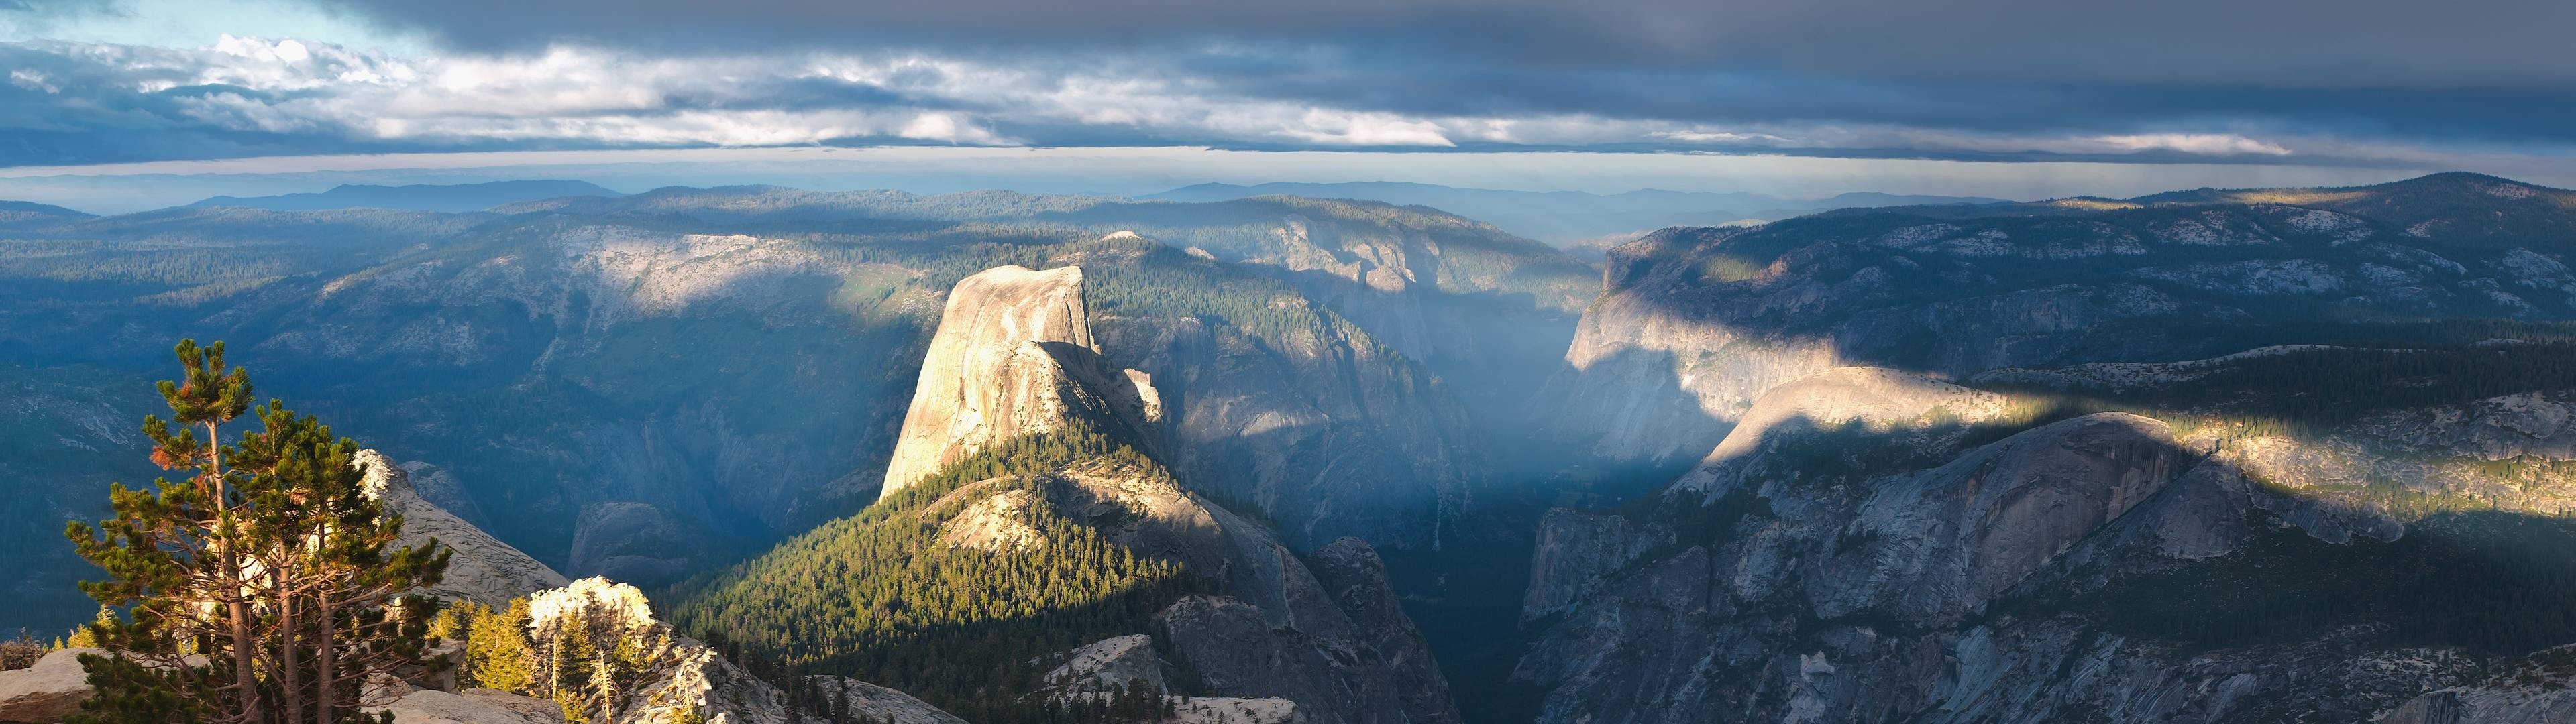 Multiple Display Half Dome Yosemite National Park Landscape 3840x1080